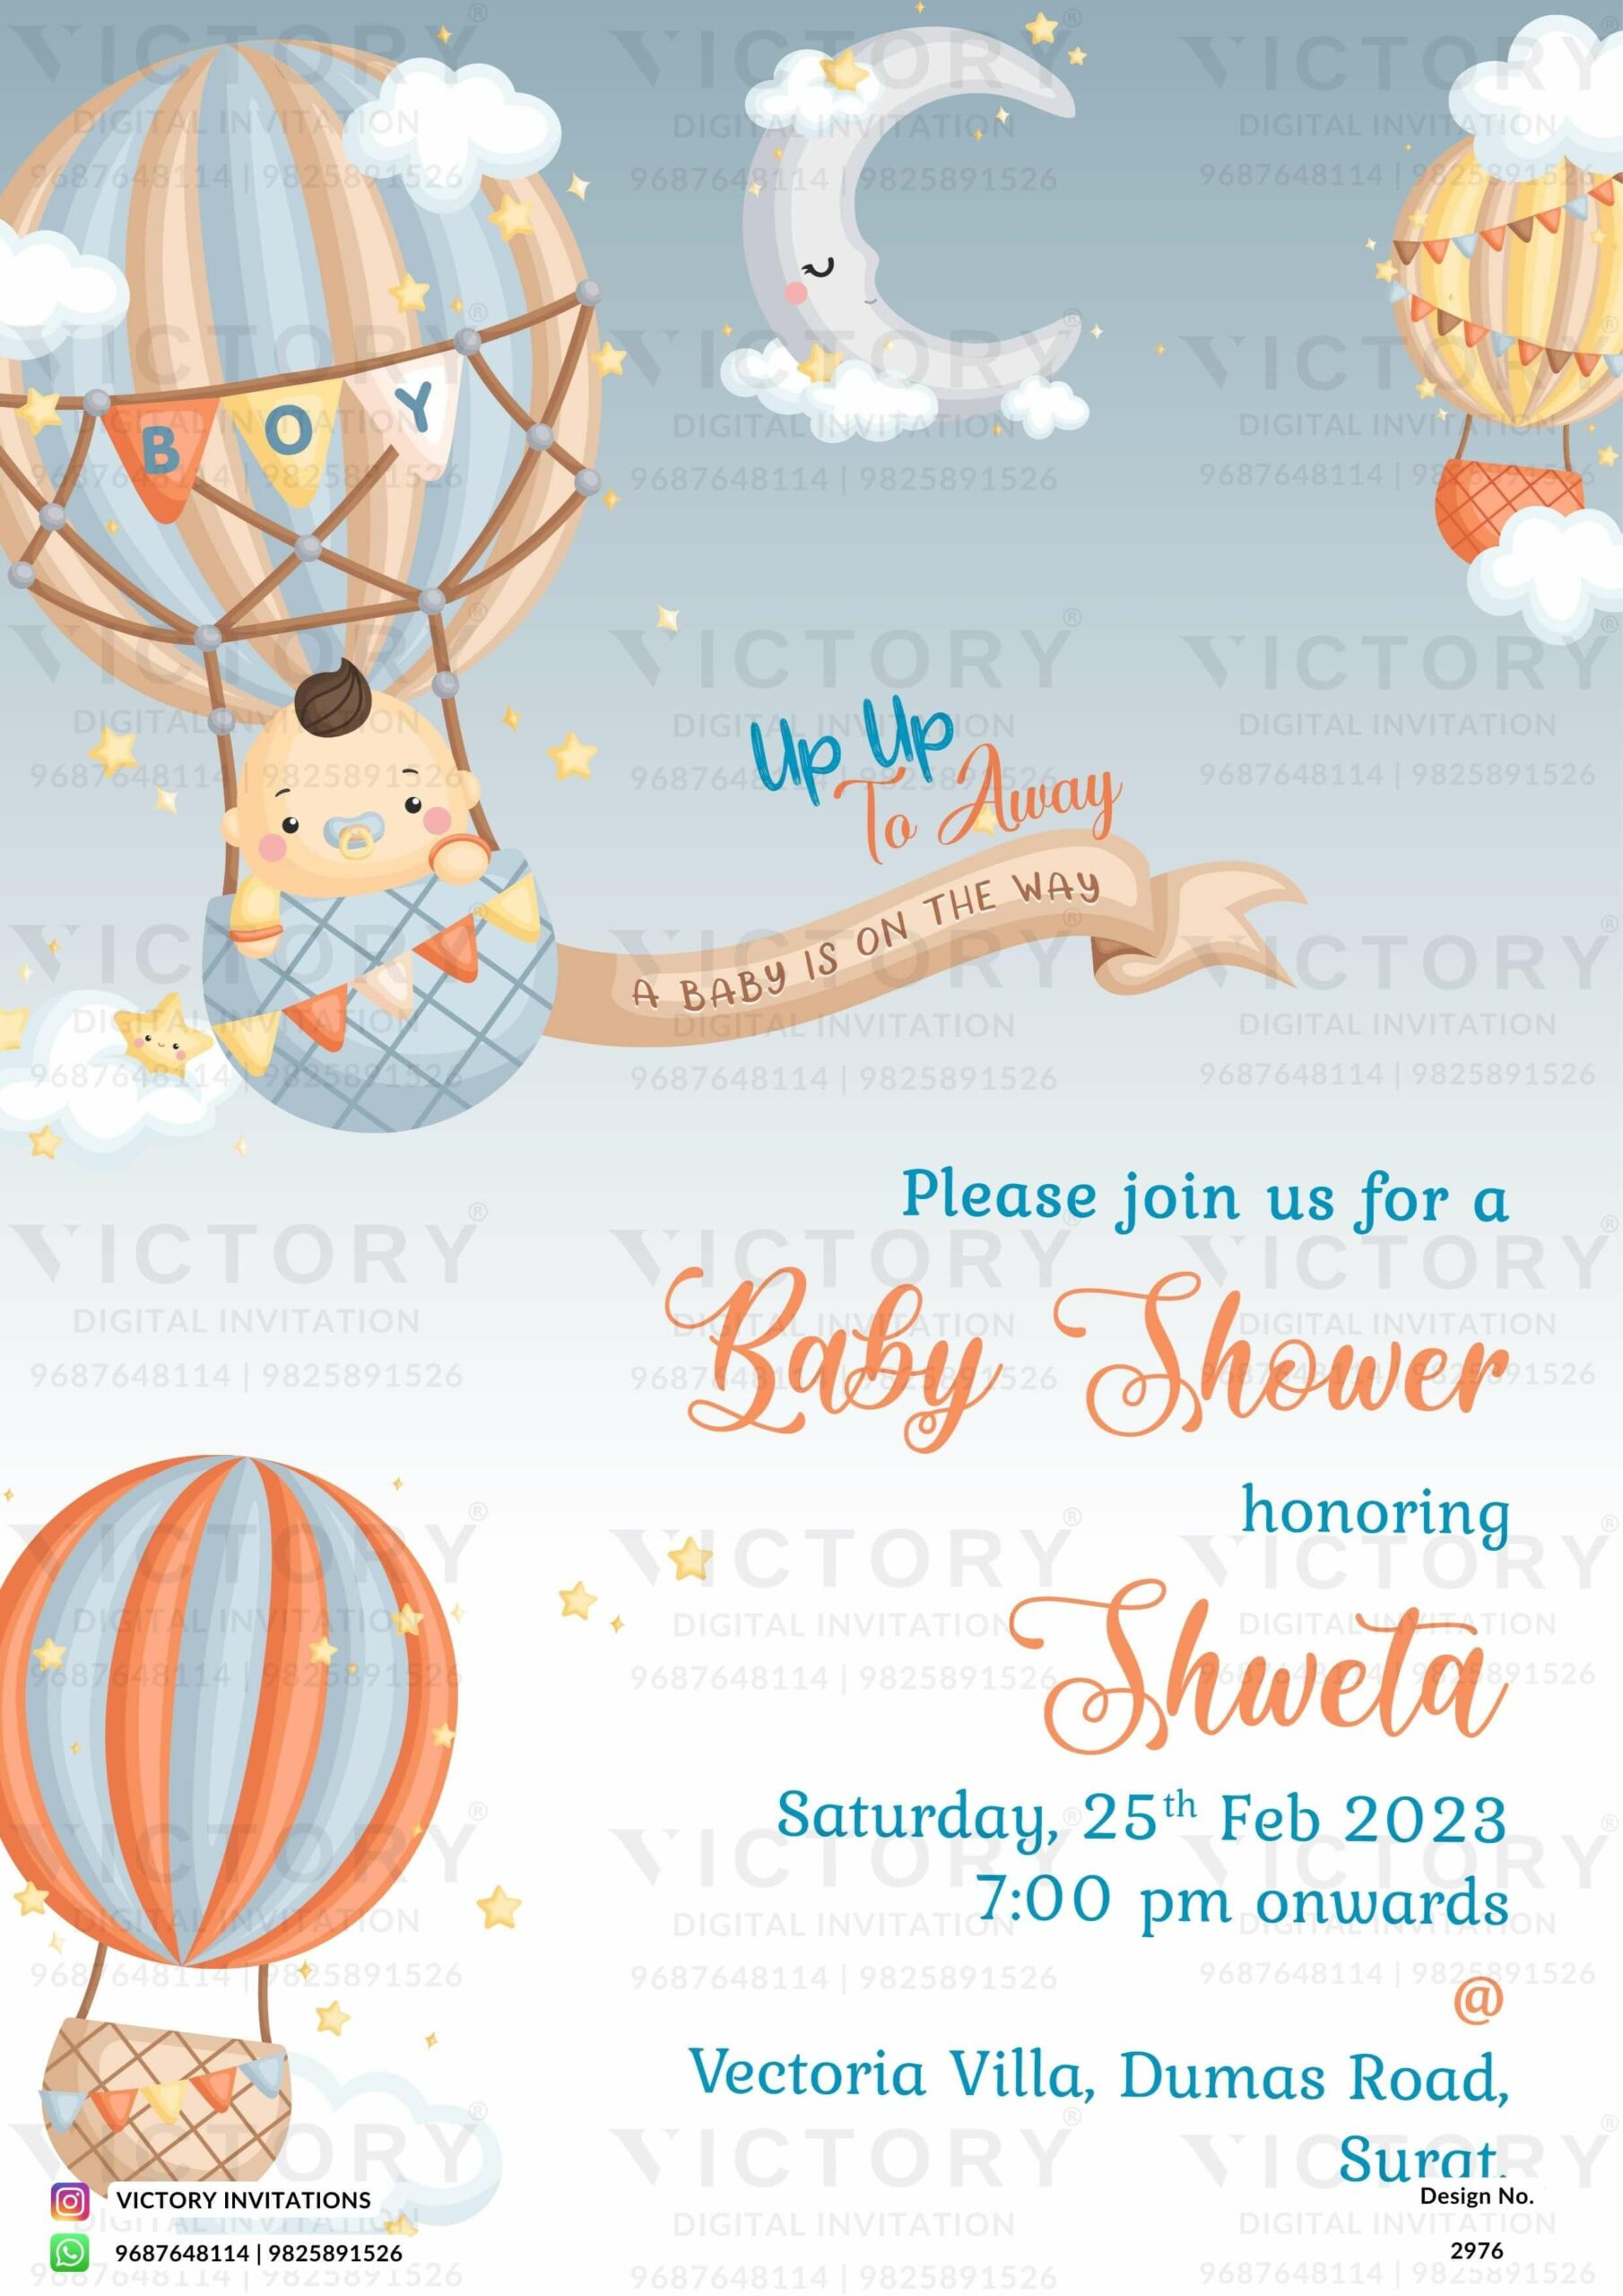 Baby Shower digital invitation card in english design no.2976